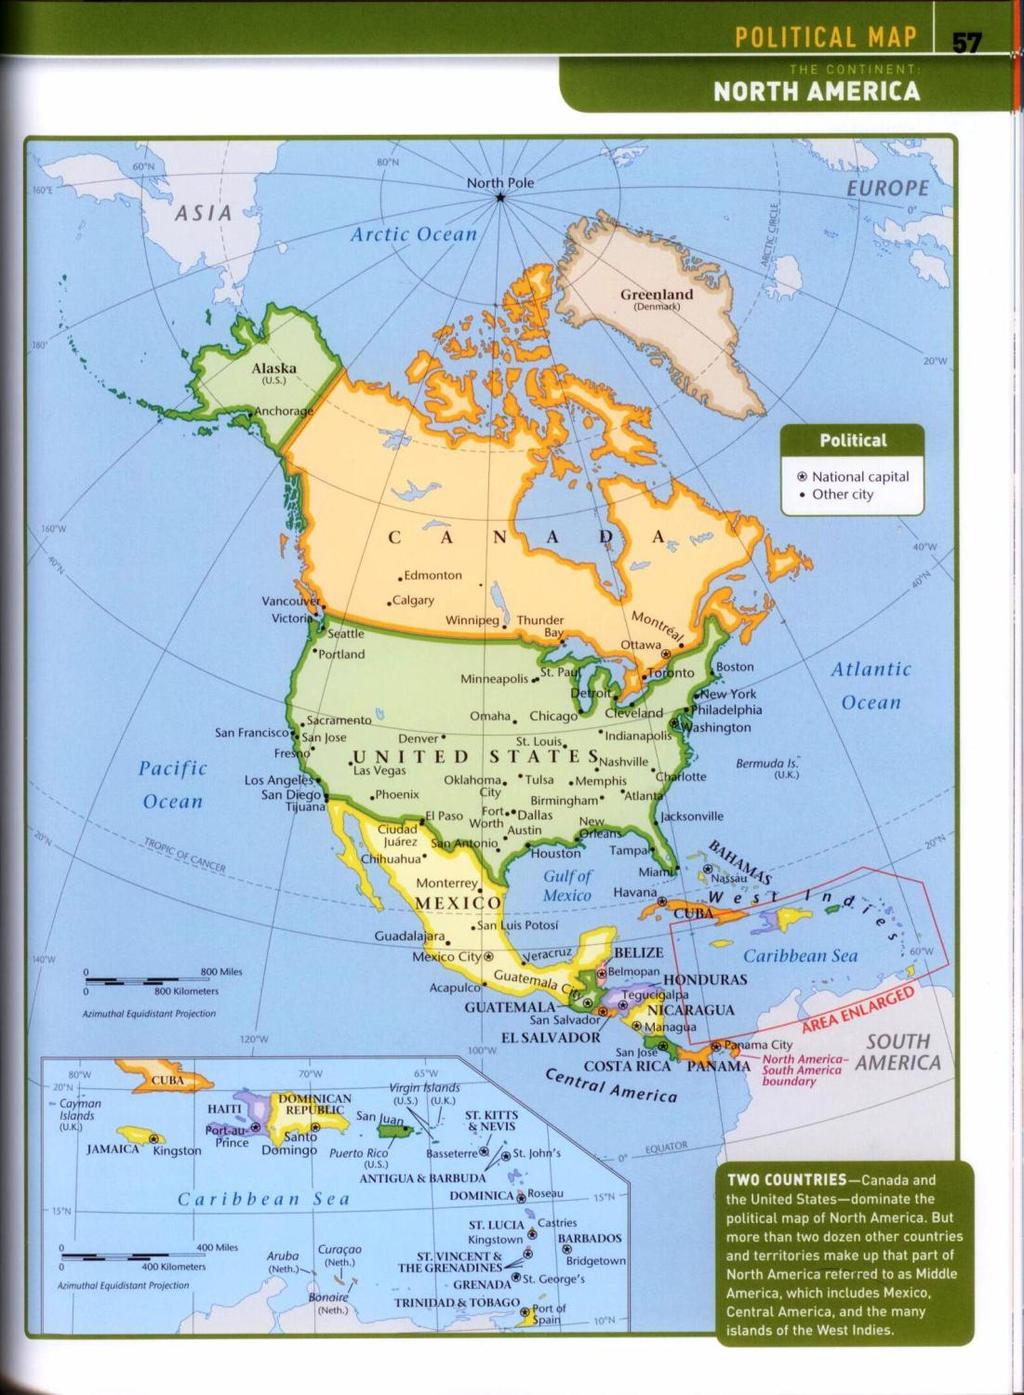 North America 23 countries Big 3: Canada, USA, Mexico Central America Caribbean 1 territory